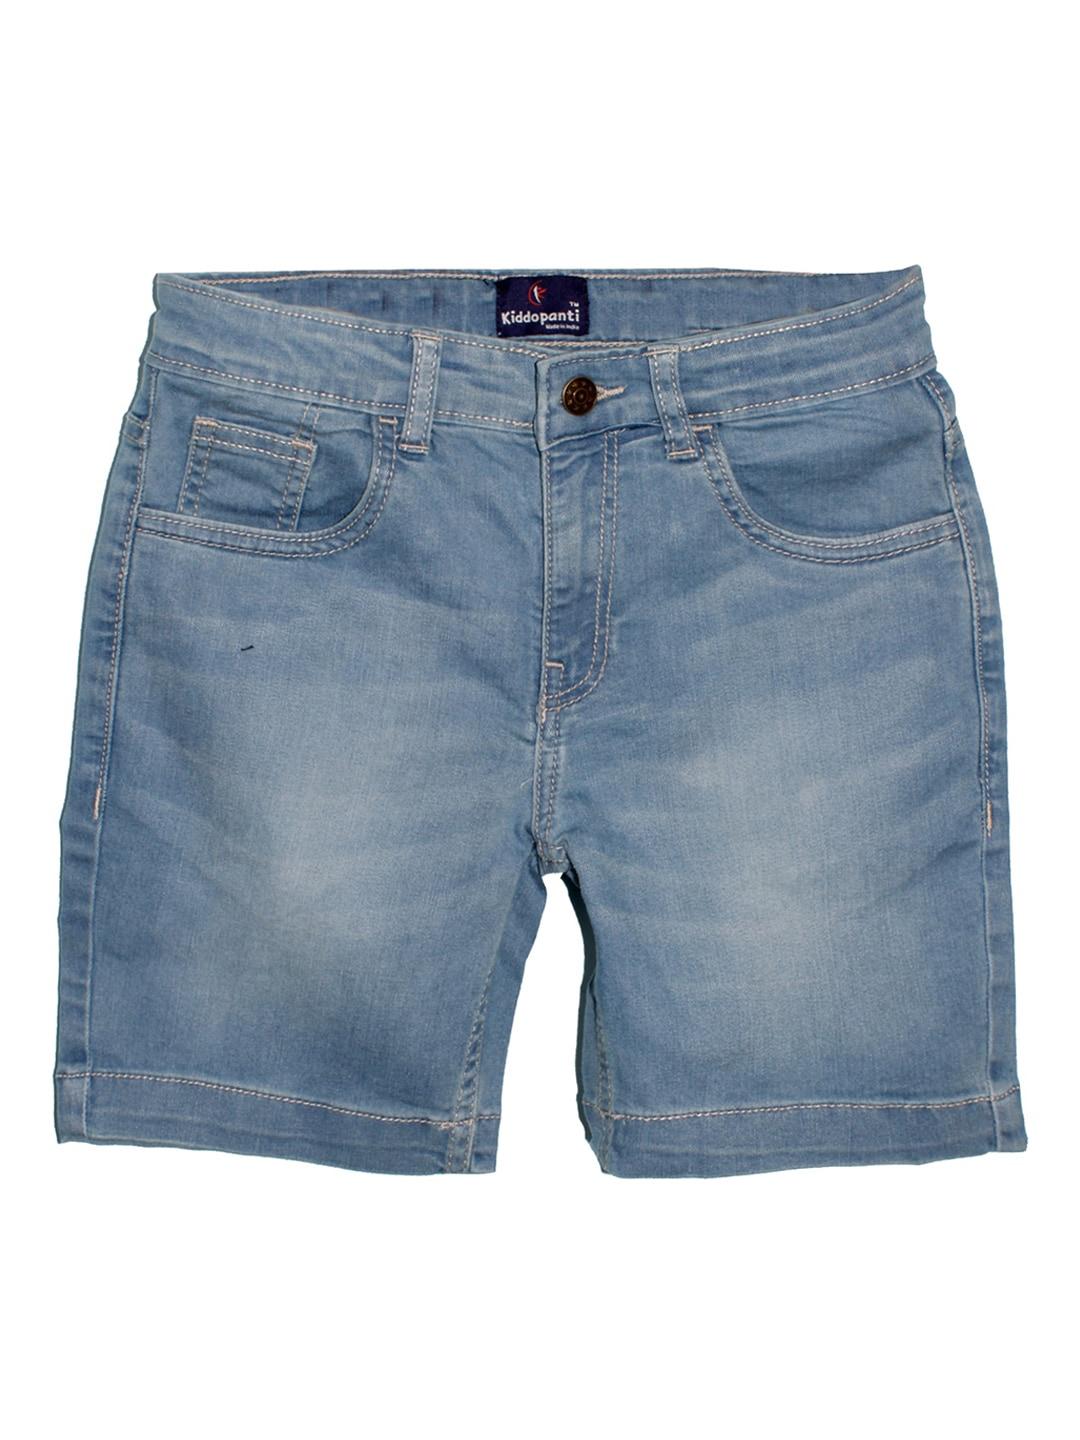 kiddopanti-boys-mid-rise-denim-shorts